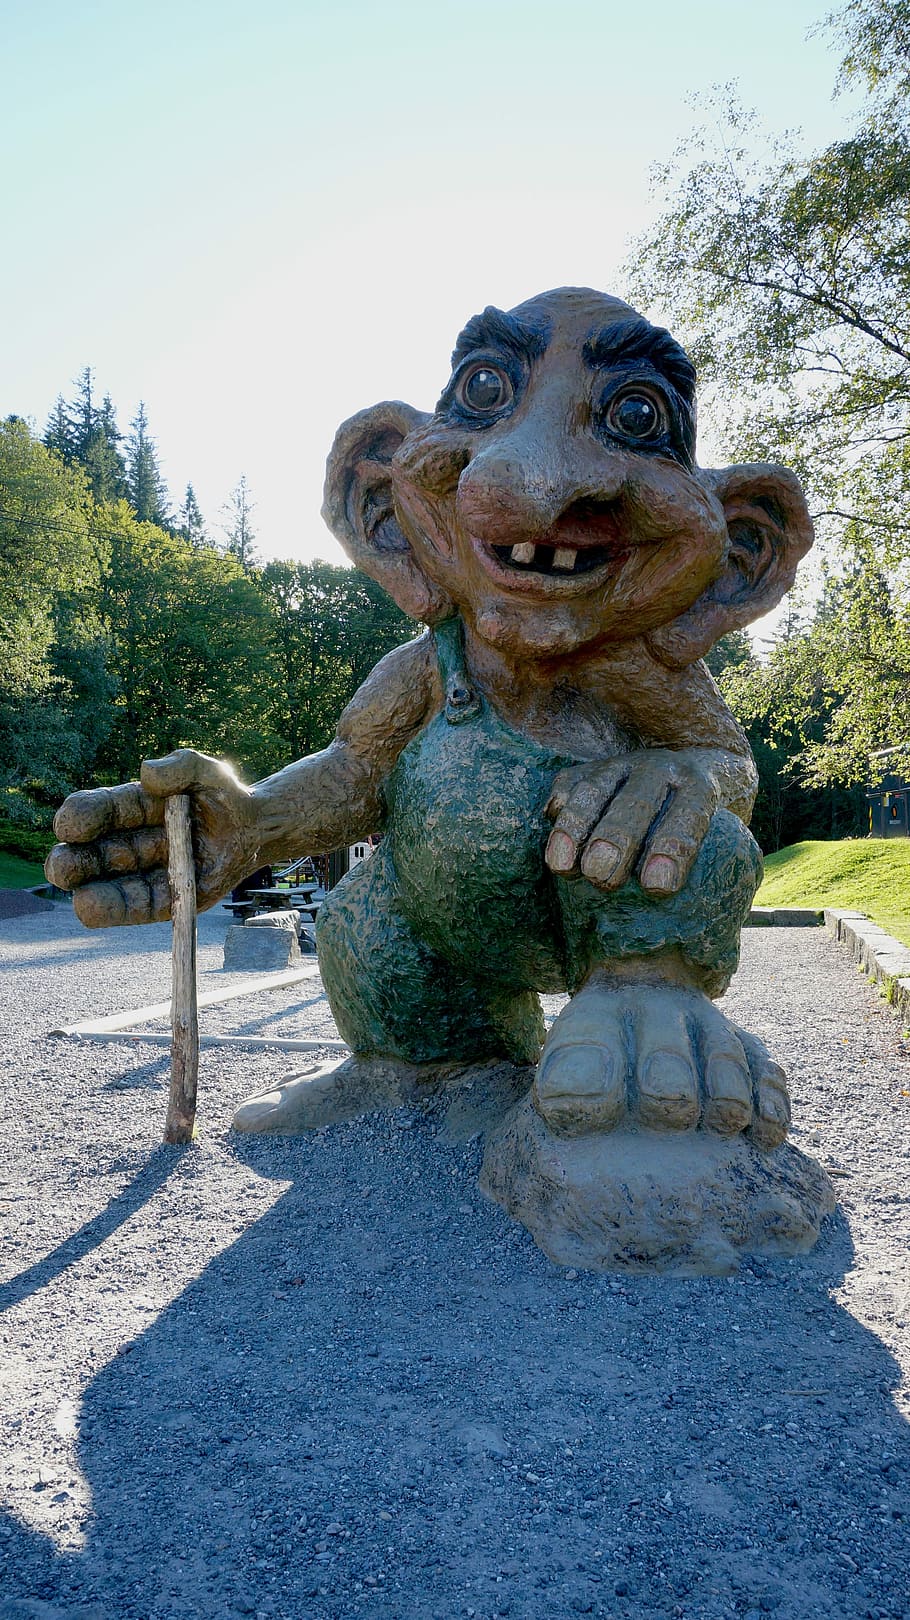 troll, norway, huge, troll figure, mountains, art and craft, sculpture, representation, statue, creativity